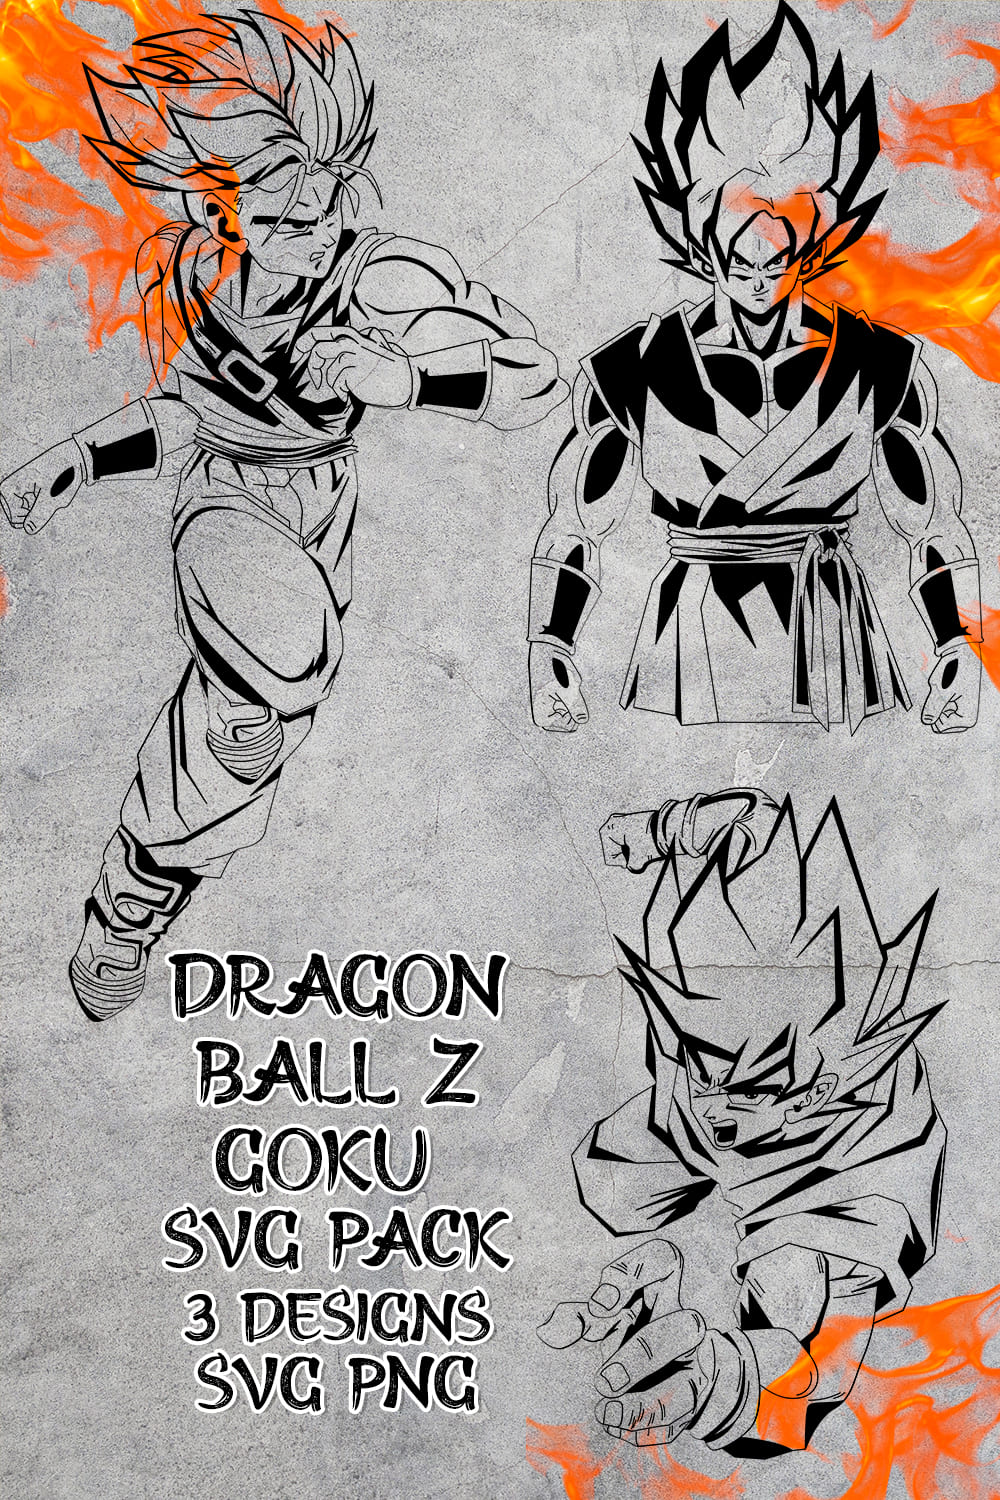 Dragon Ball Z Goku SVG on the grey background.